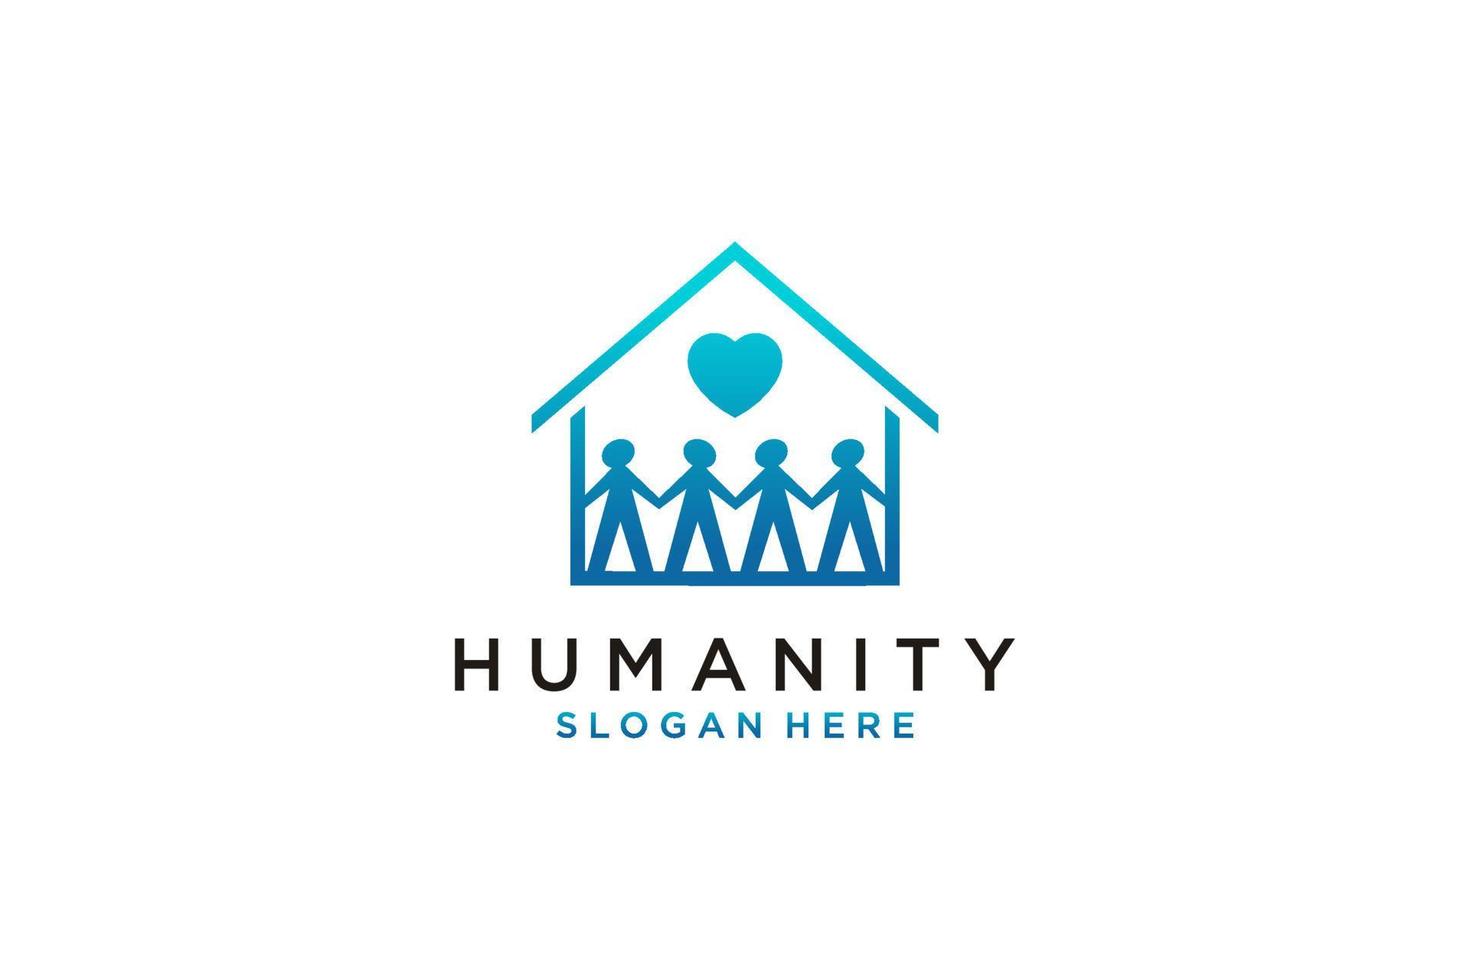 Social Humanity People Logo. Flat Vector Logo Design Template Element